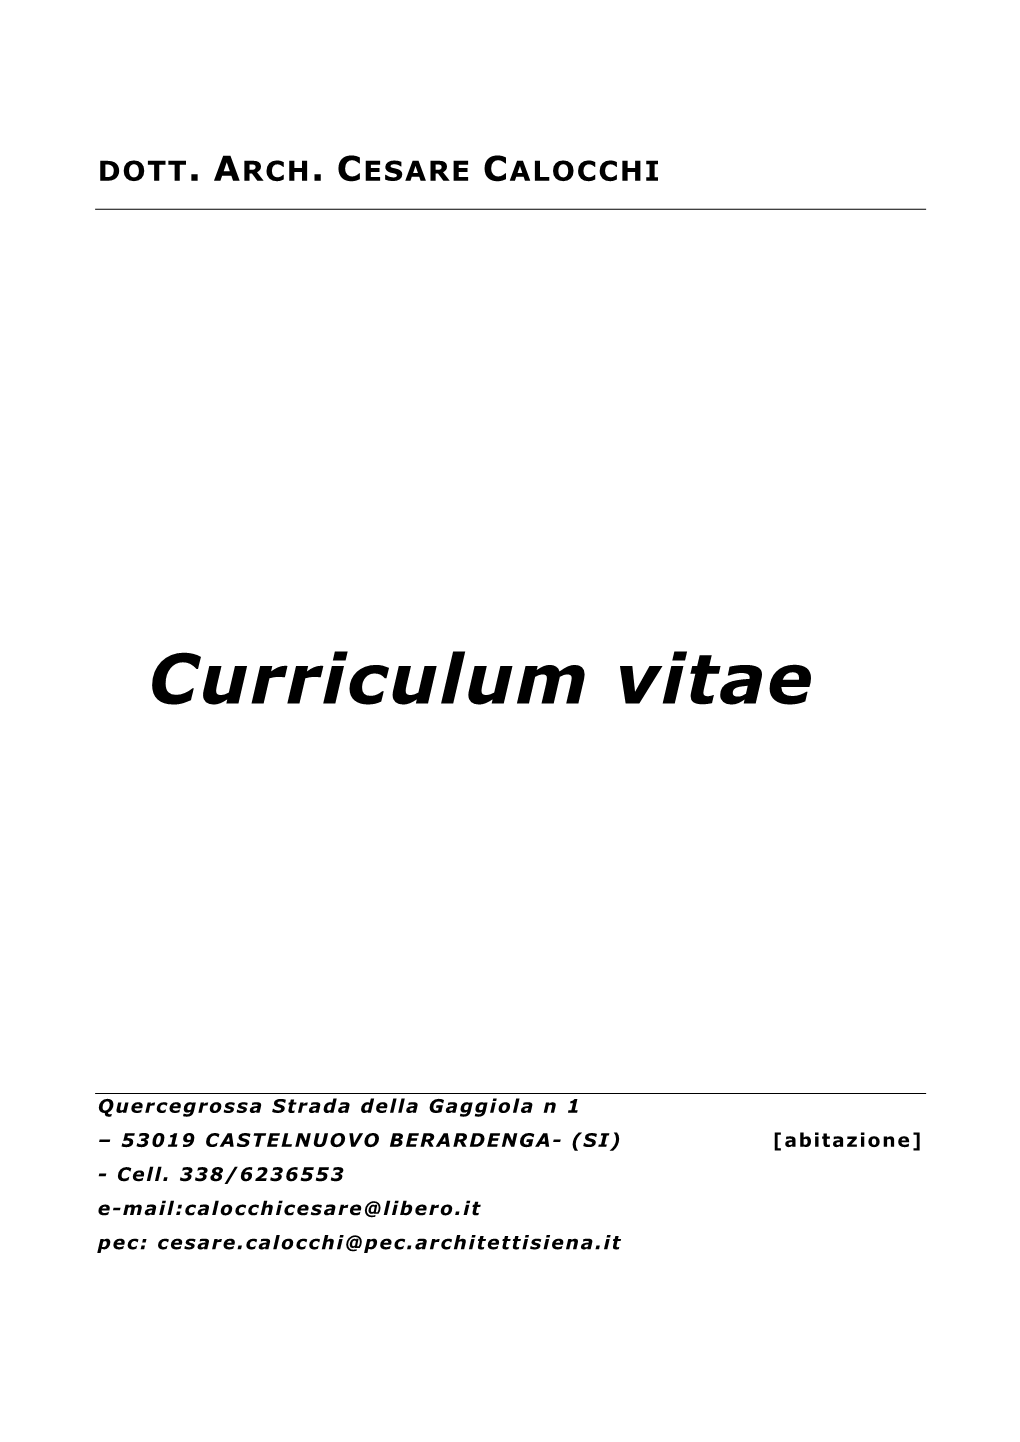 Curriculum Arch. Cesare Calocchi